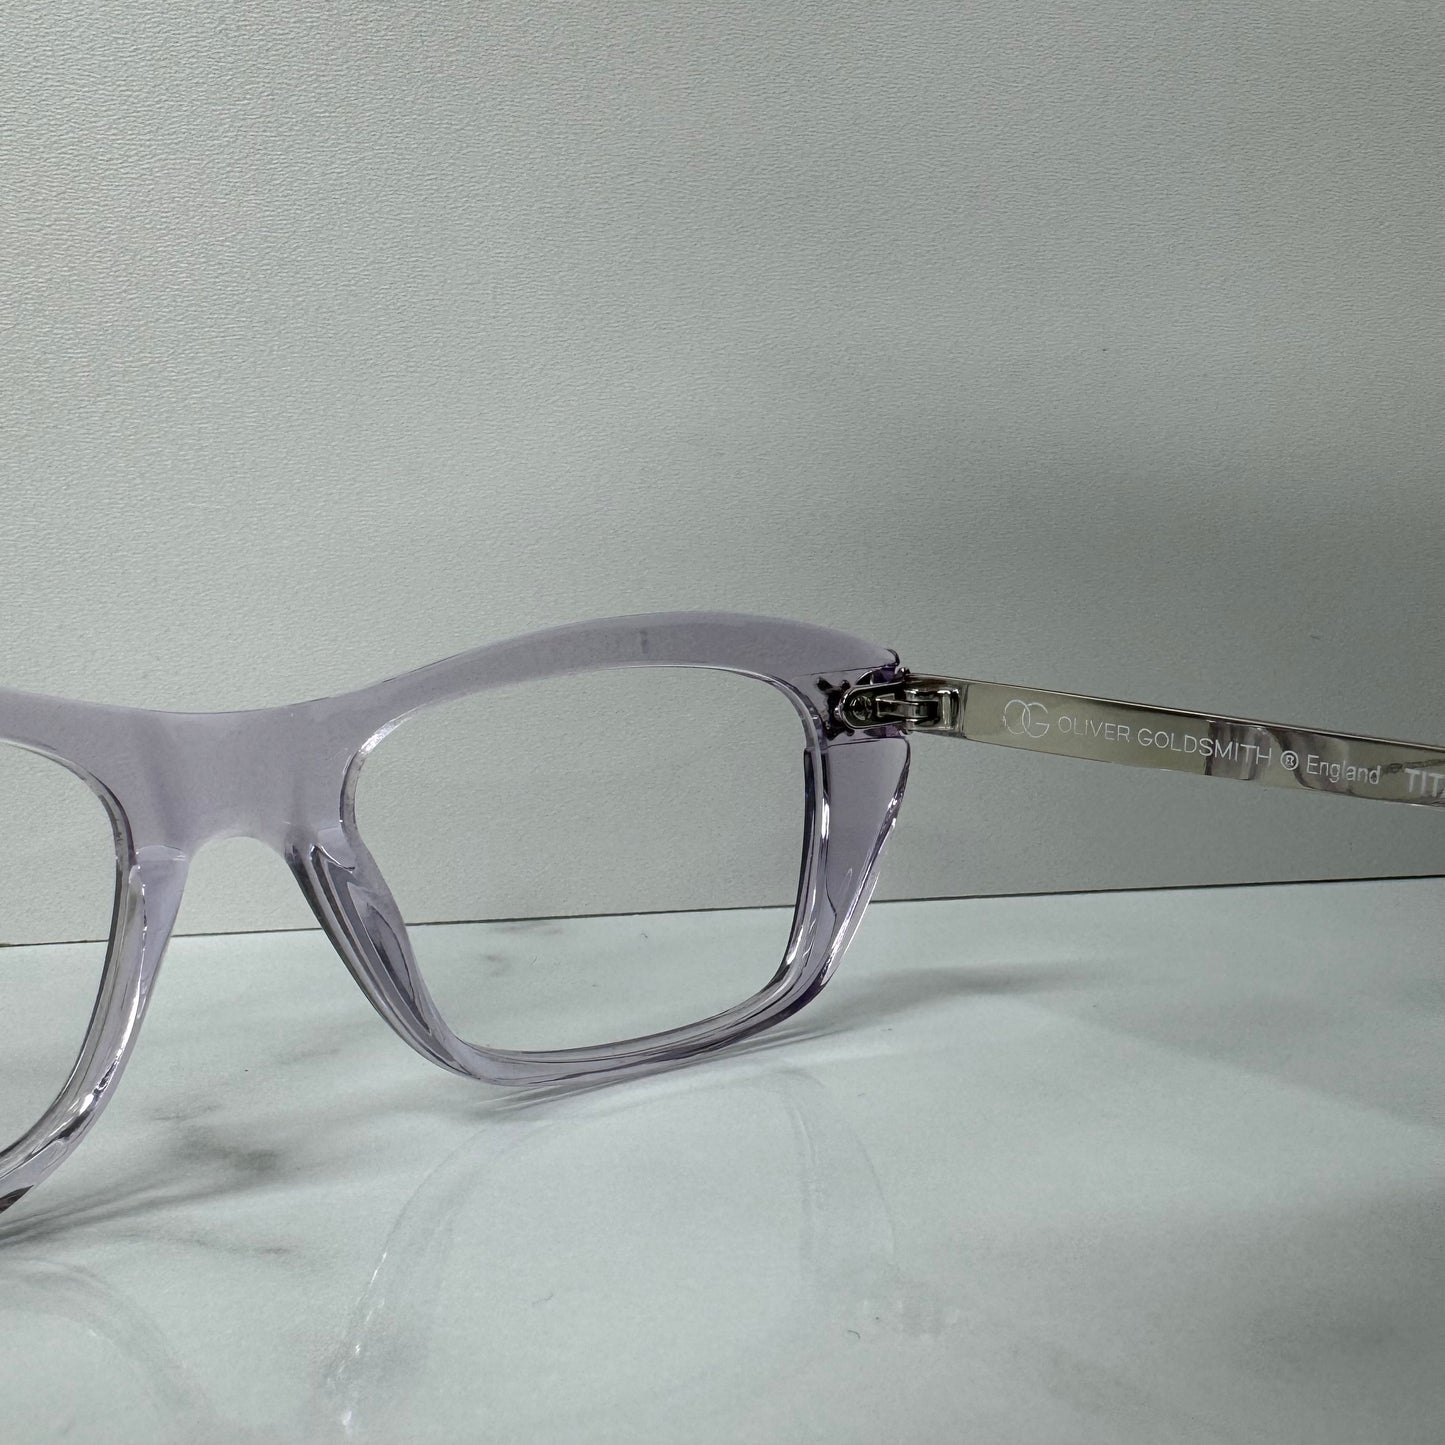 Oliver Goldsmith Glasses Frames Sister2 OLI044-04 Clear Transparent Purple